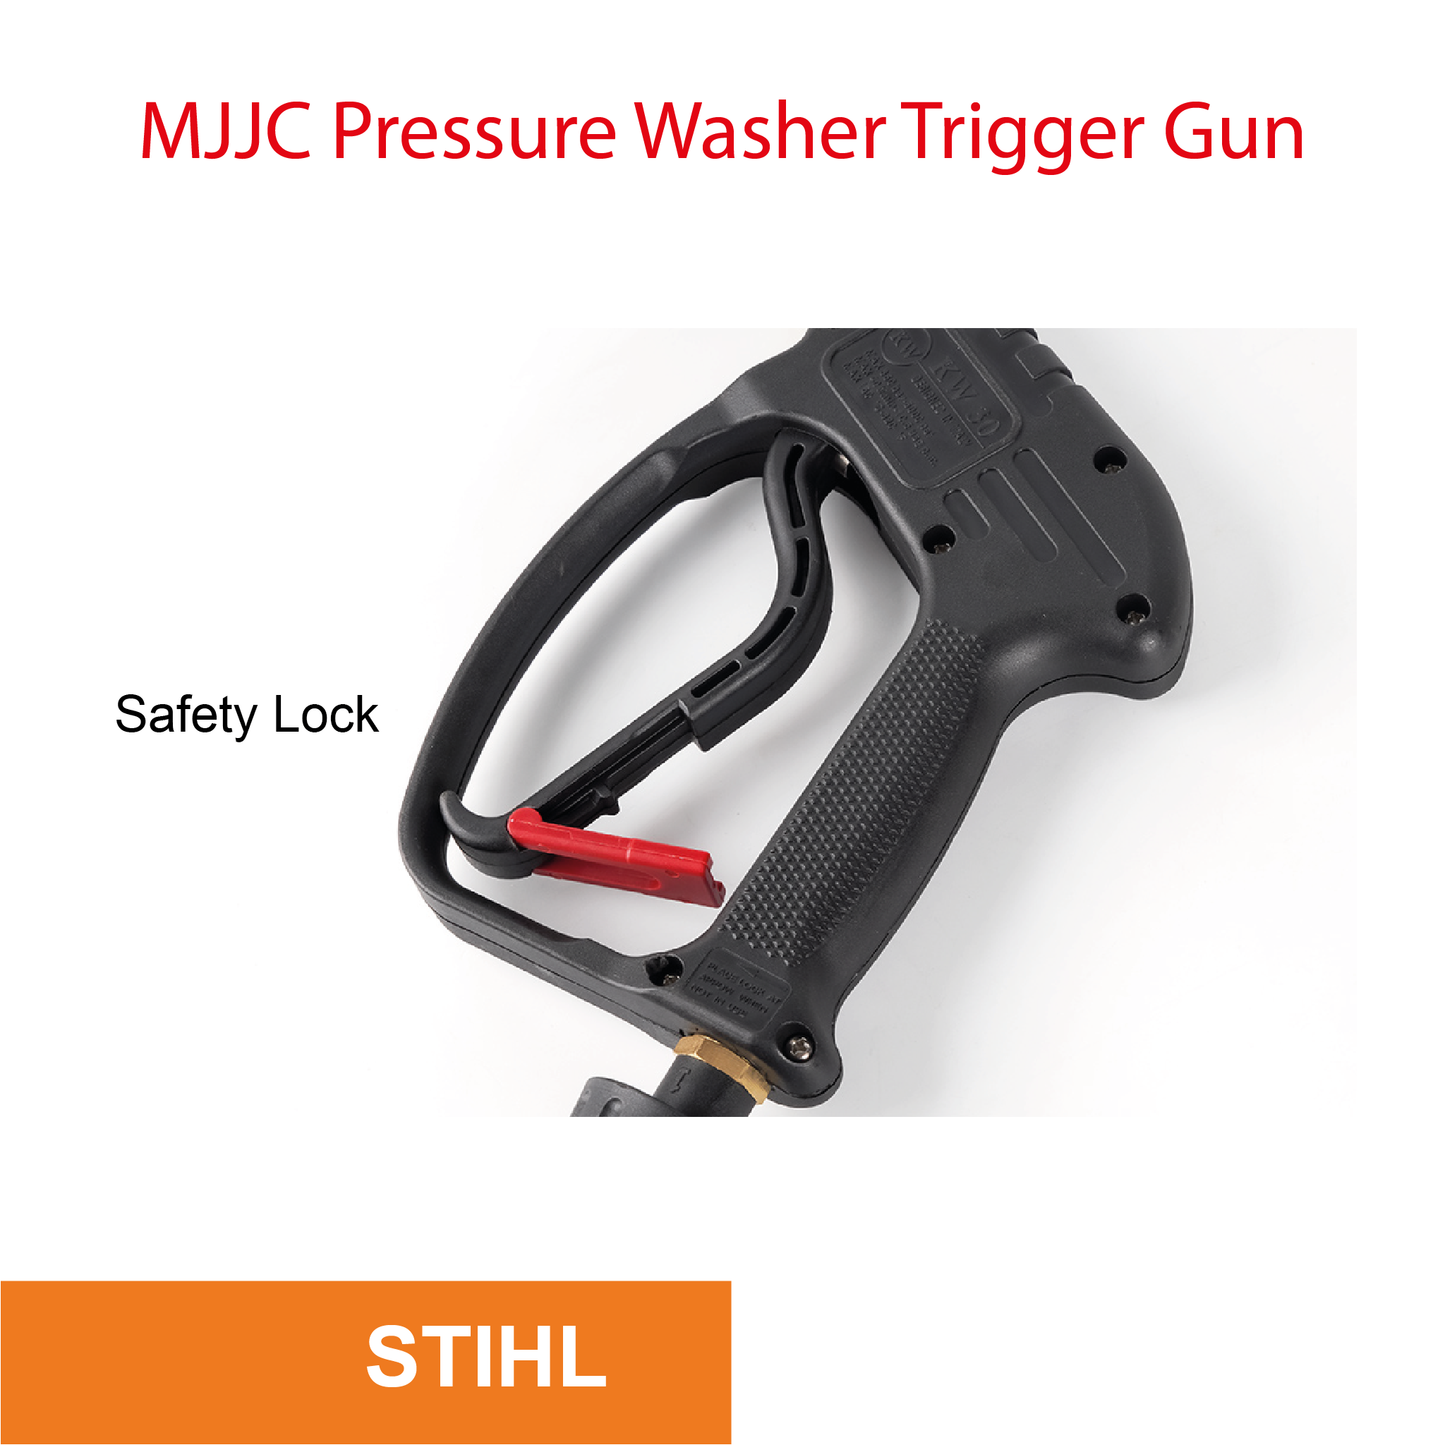 STIHL - MJJC Light Weight Pressure Washer Trigger Spray Gun with Live Swivel